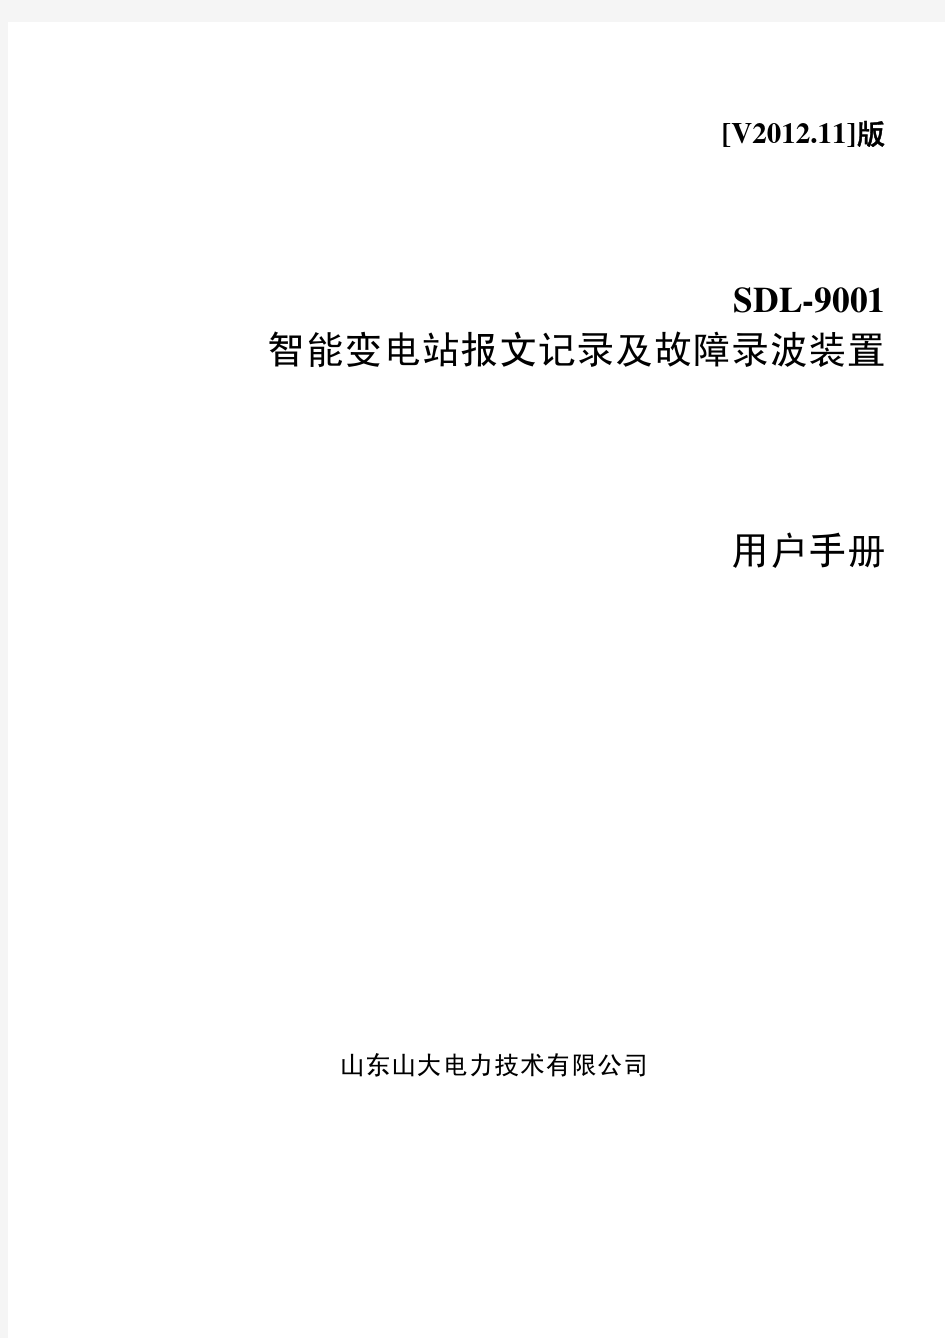 SDL-9001智能变电站报文记录及故障录波装置说明书